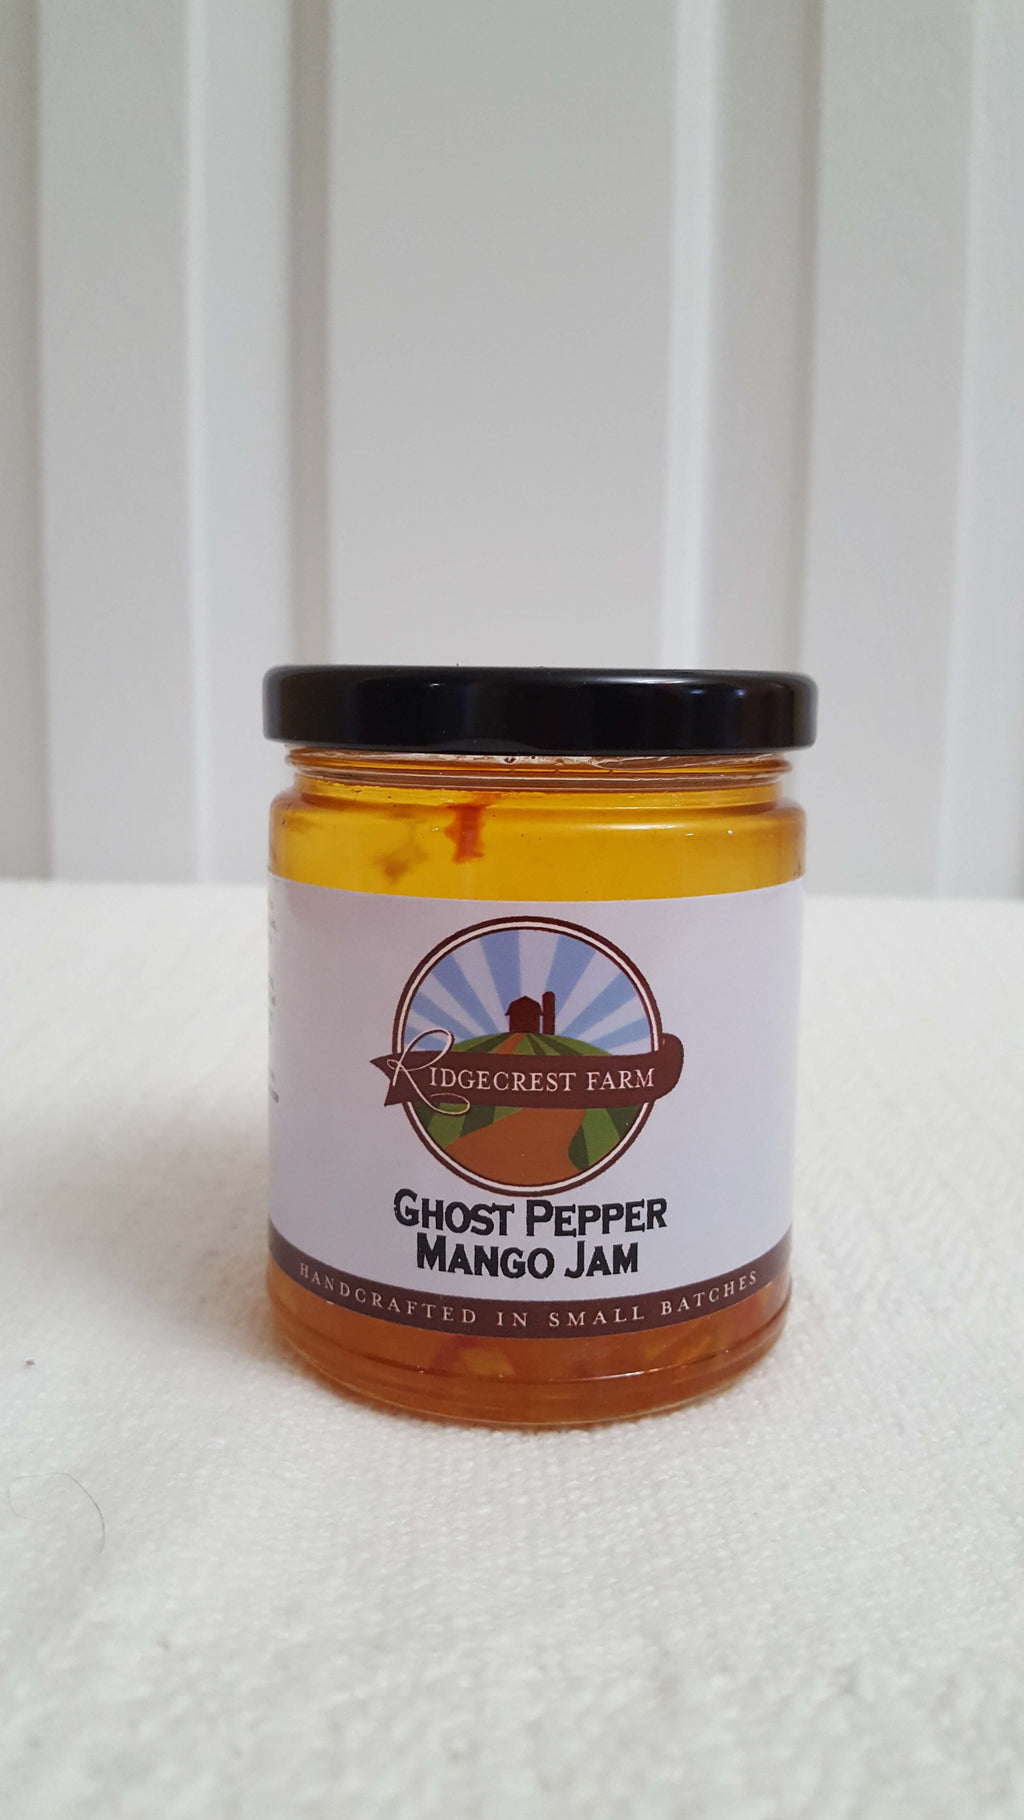 Ghost Pepper Mango Jam